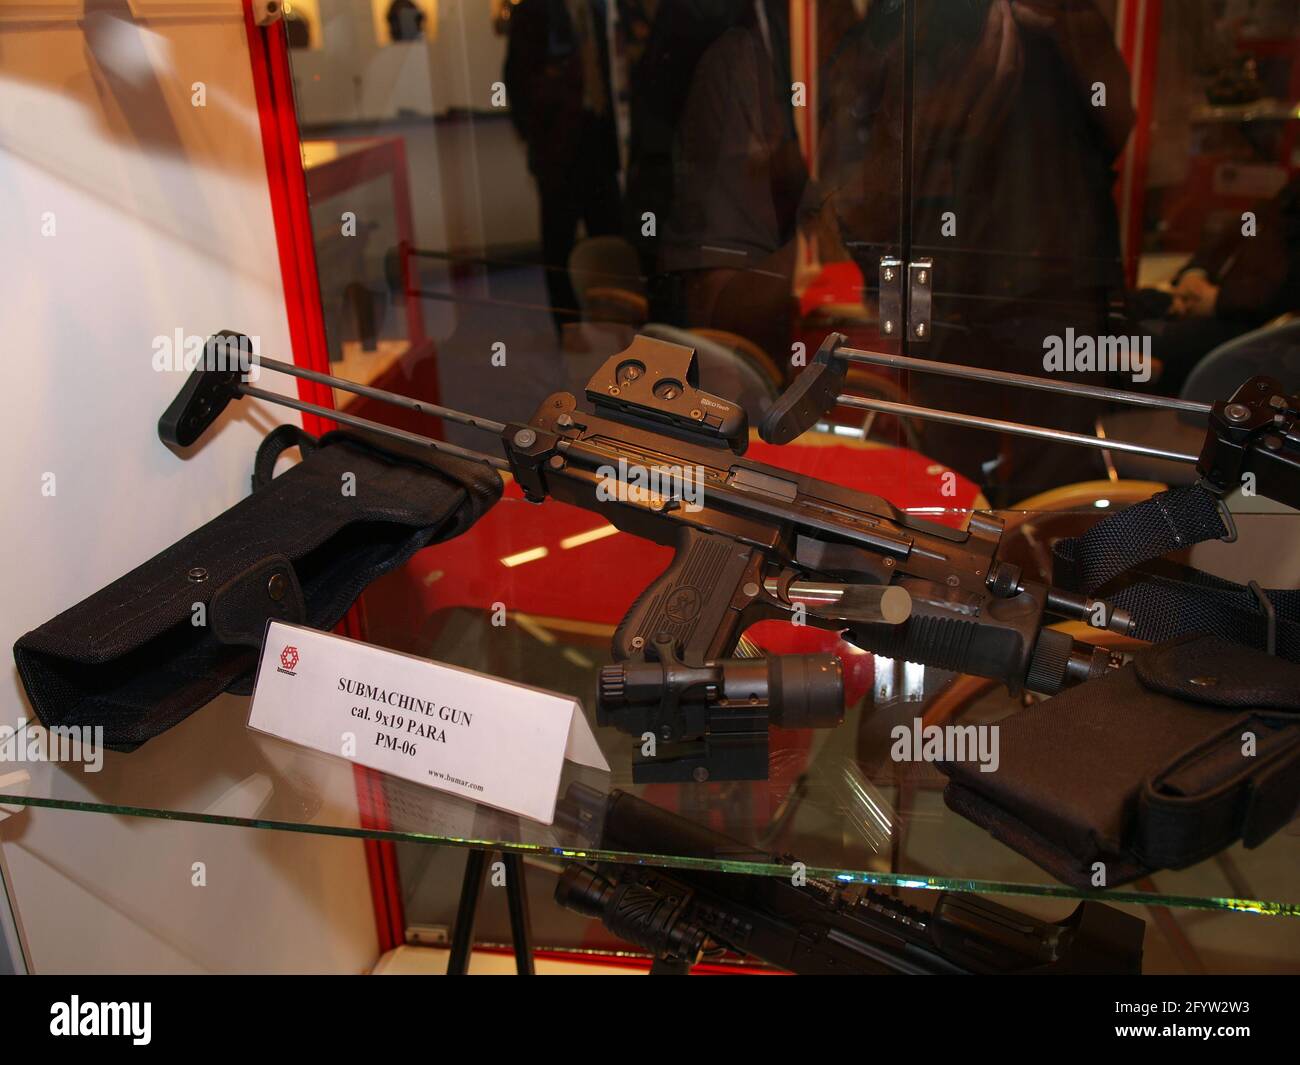 PM-06 submachine gun in eurosatory 2008 Stock Photo